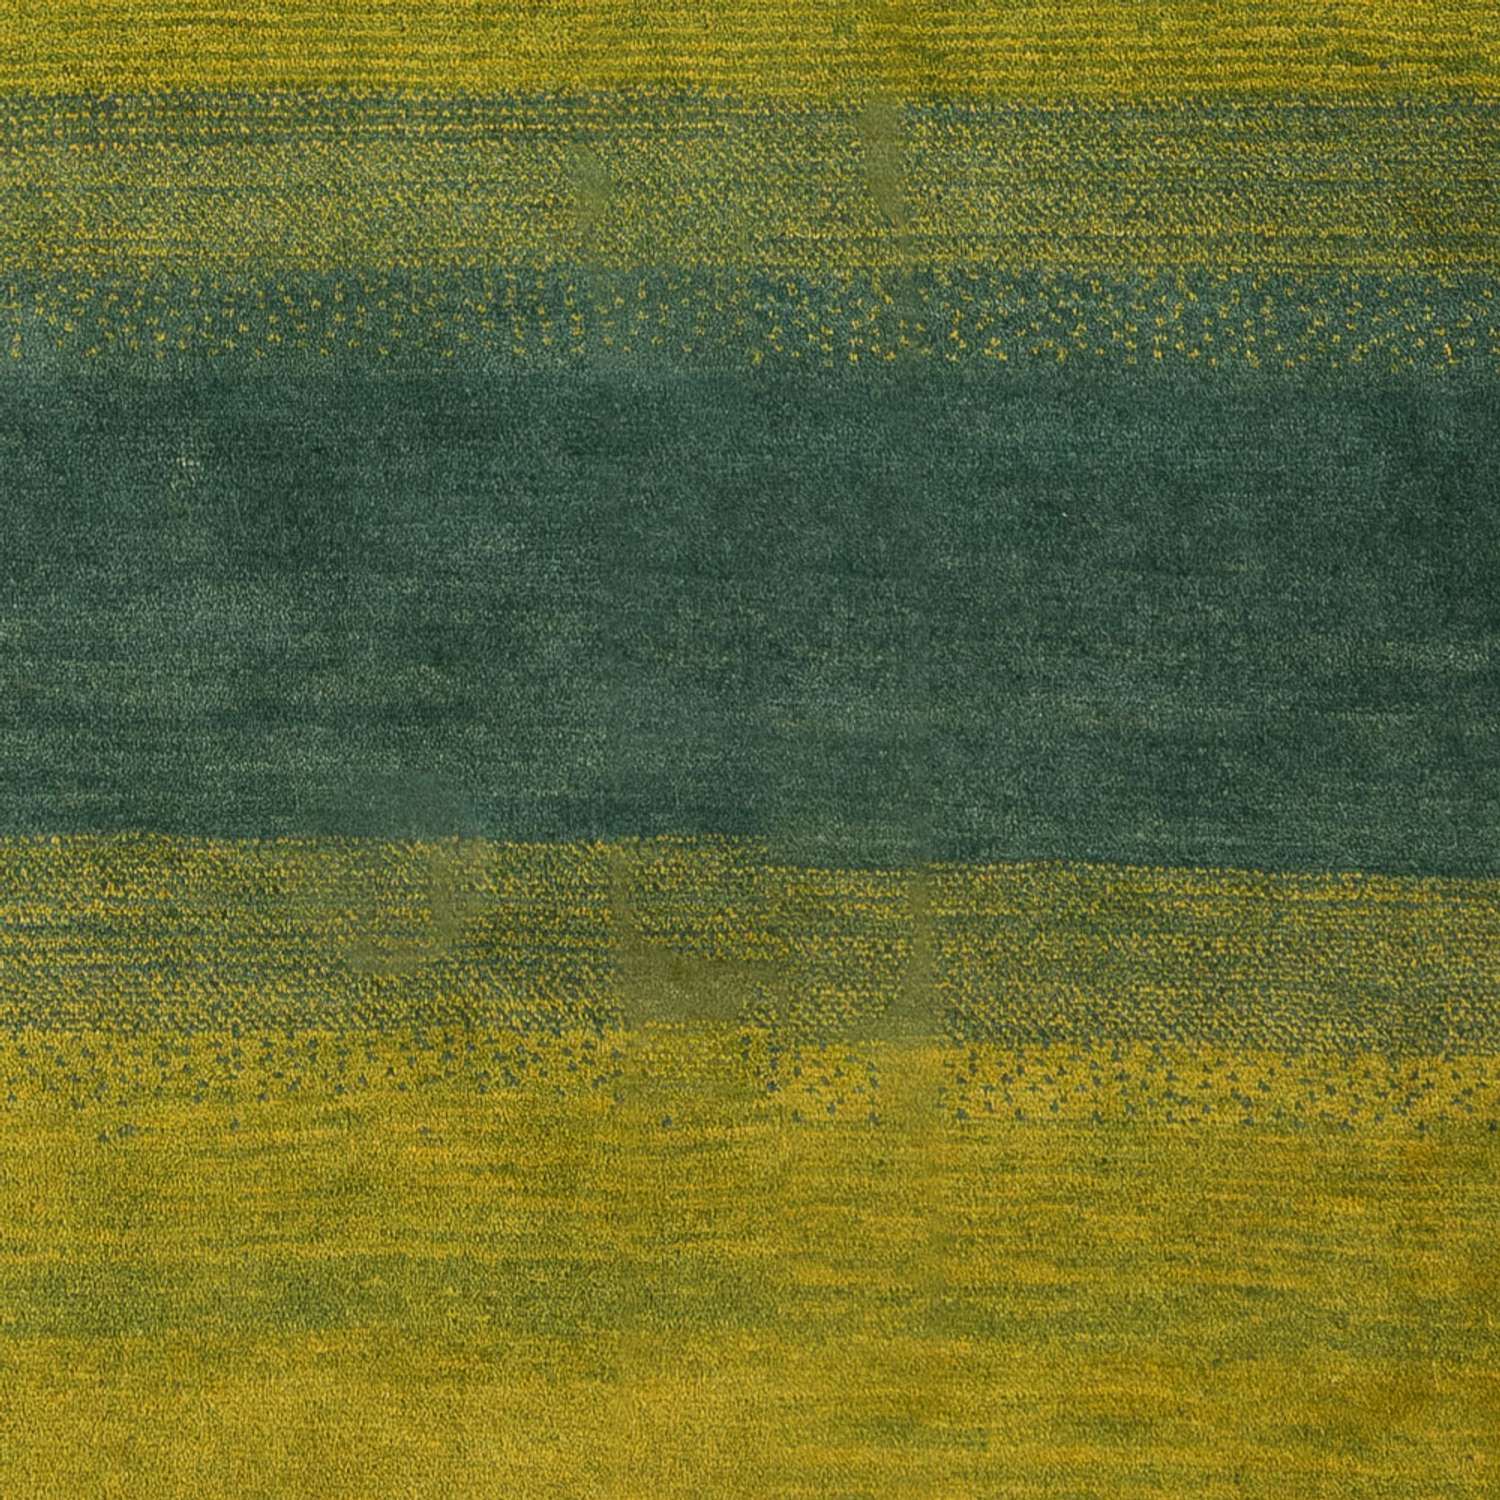 Gabbeh-teppe - persisk - 204 x 152 cm - grønn